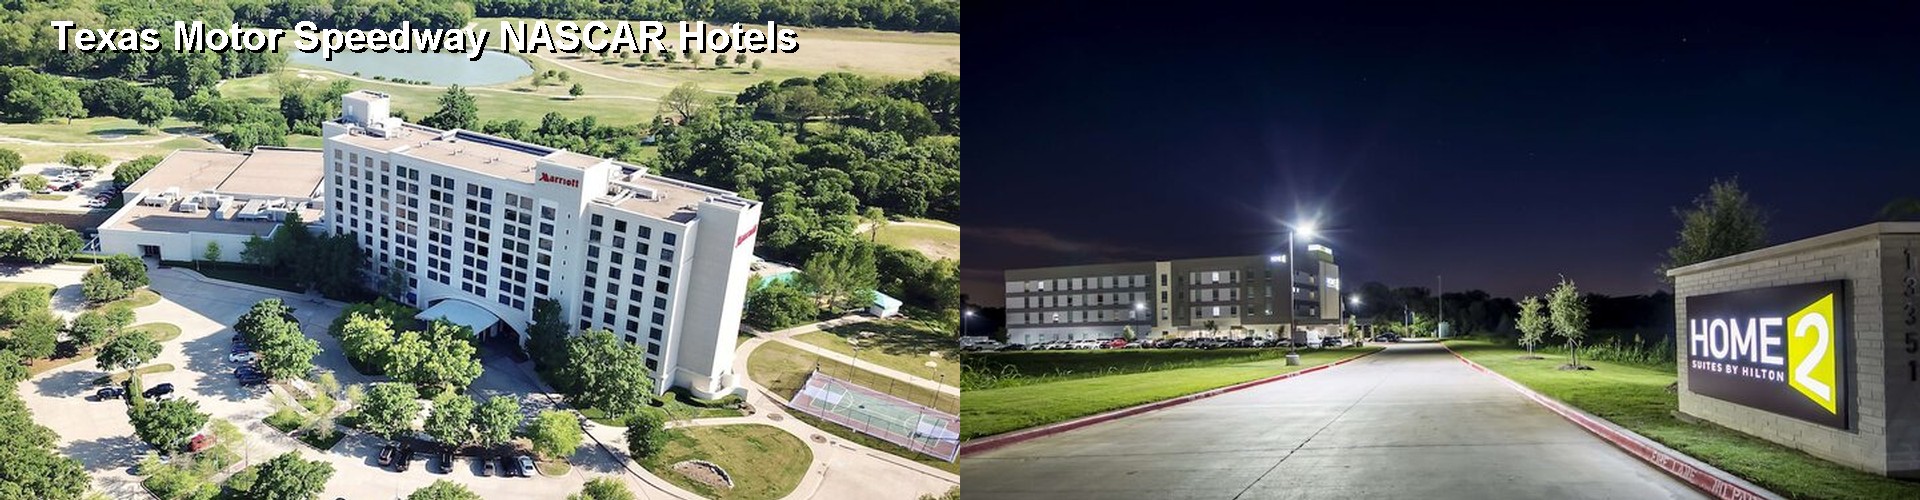 5 Best Hotels near Texas Motor Speedway NASCAR